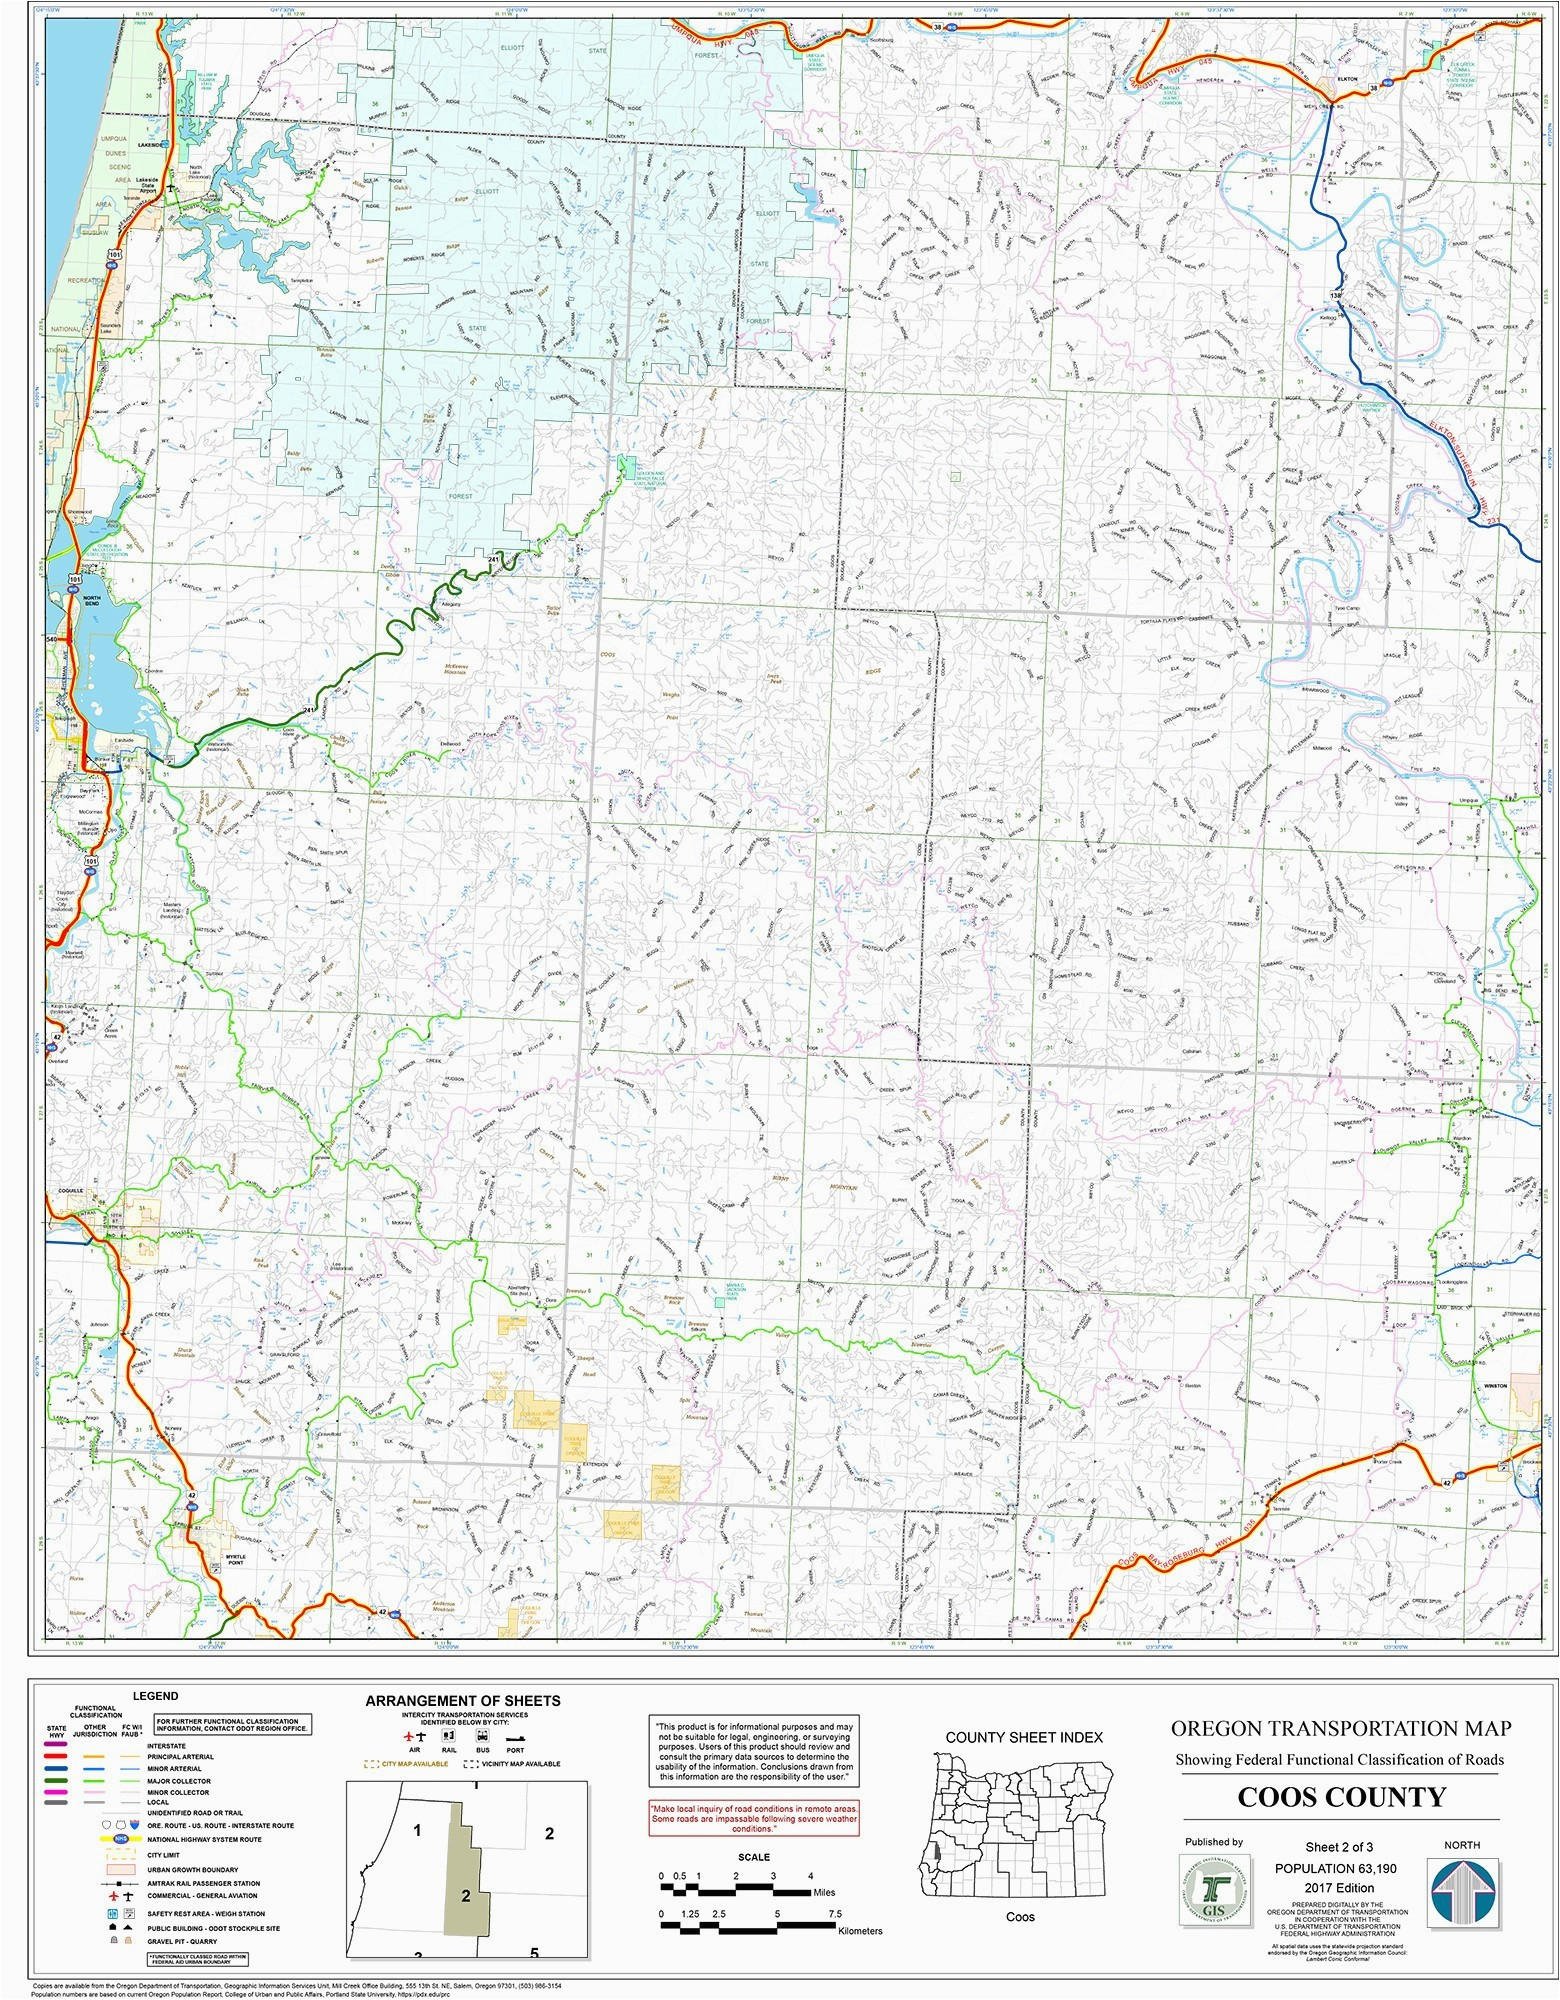 Cincinnati Ohio Map Usa Us Map with Elevation Best Of Map Cincinnati Cincinnati Maps Ohio Us